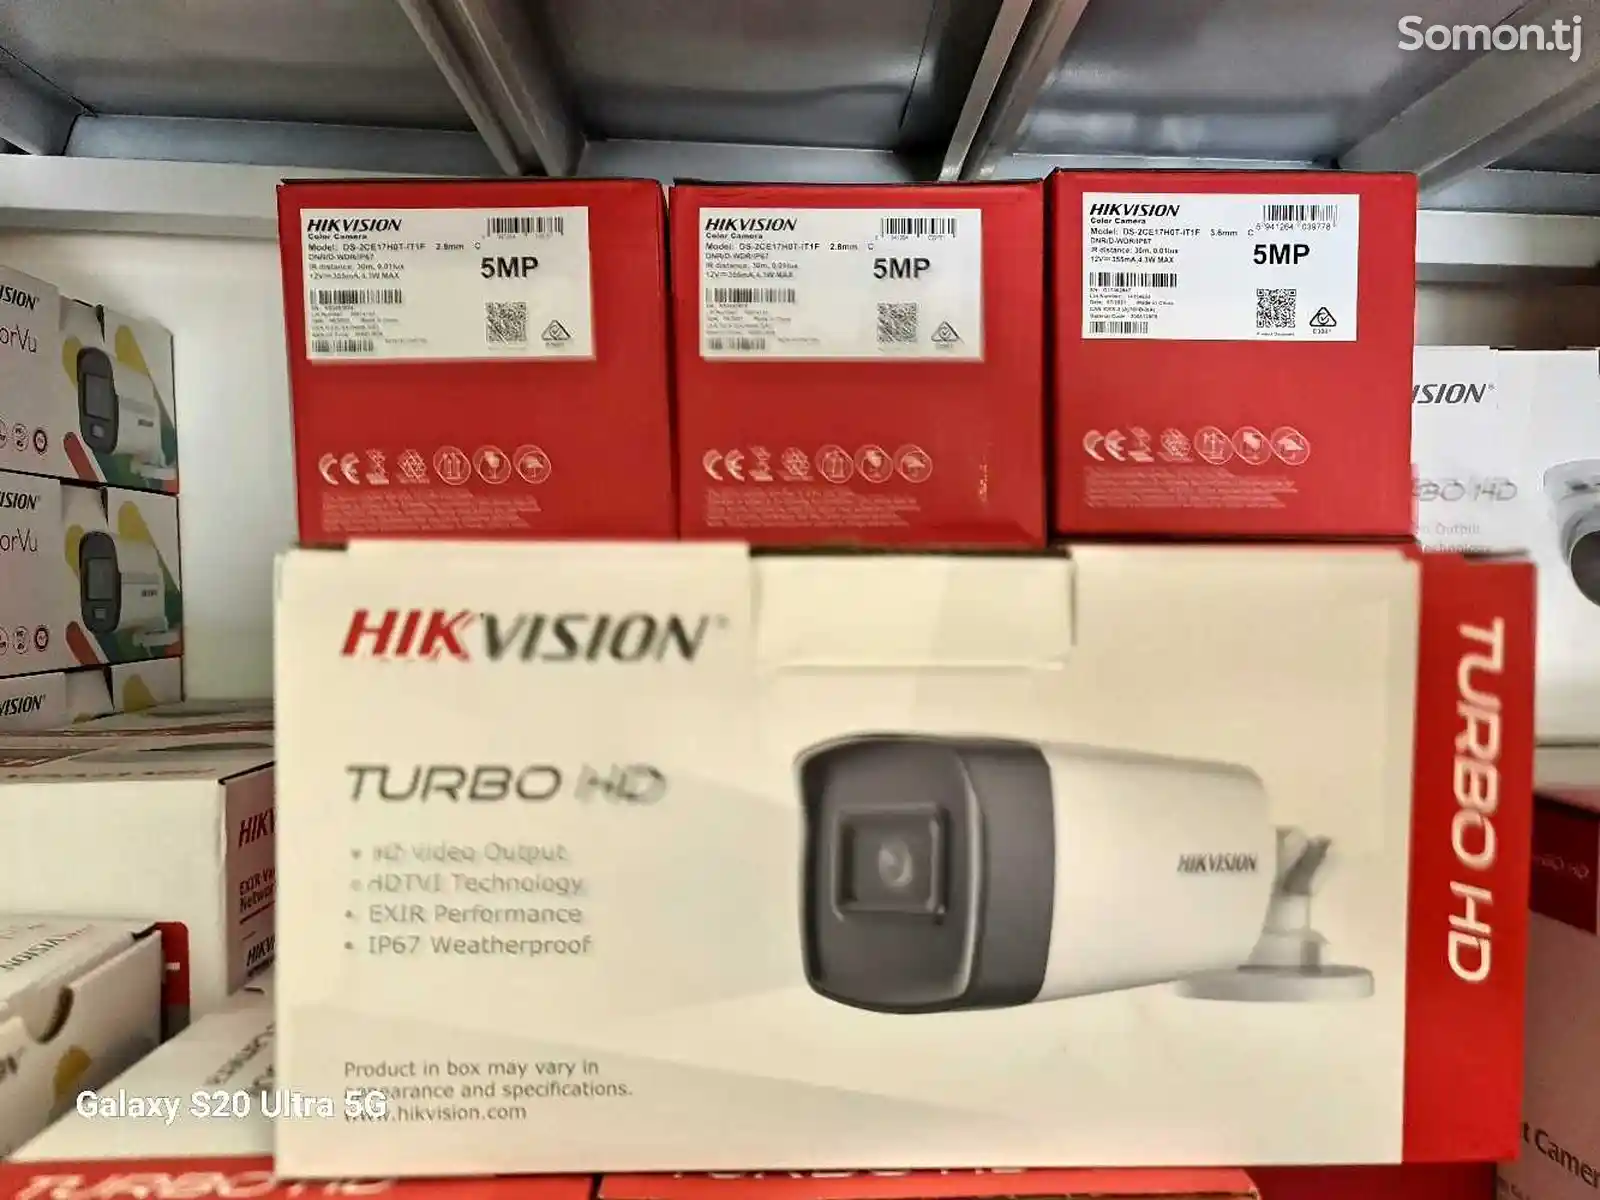 Камера видеонаблюдения Turbo-HD Hikvision с разрешением 5MP